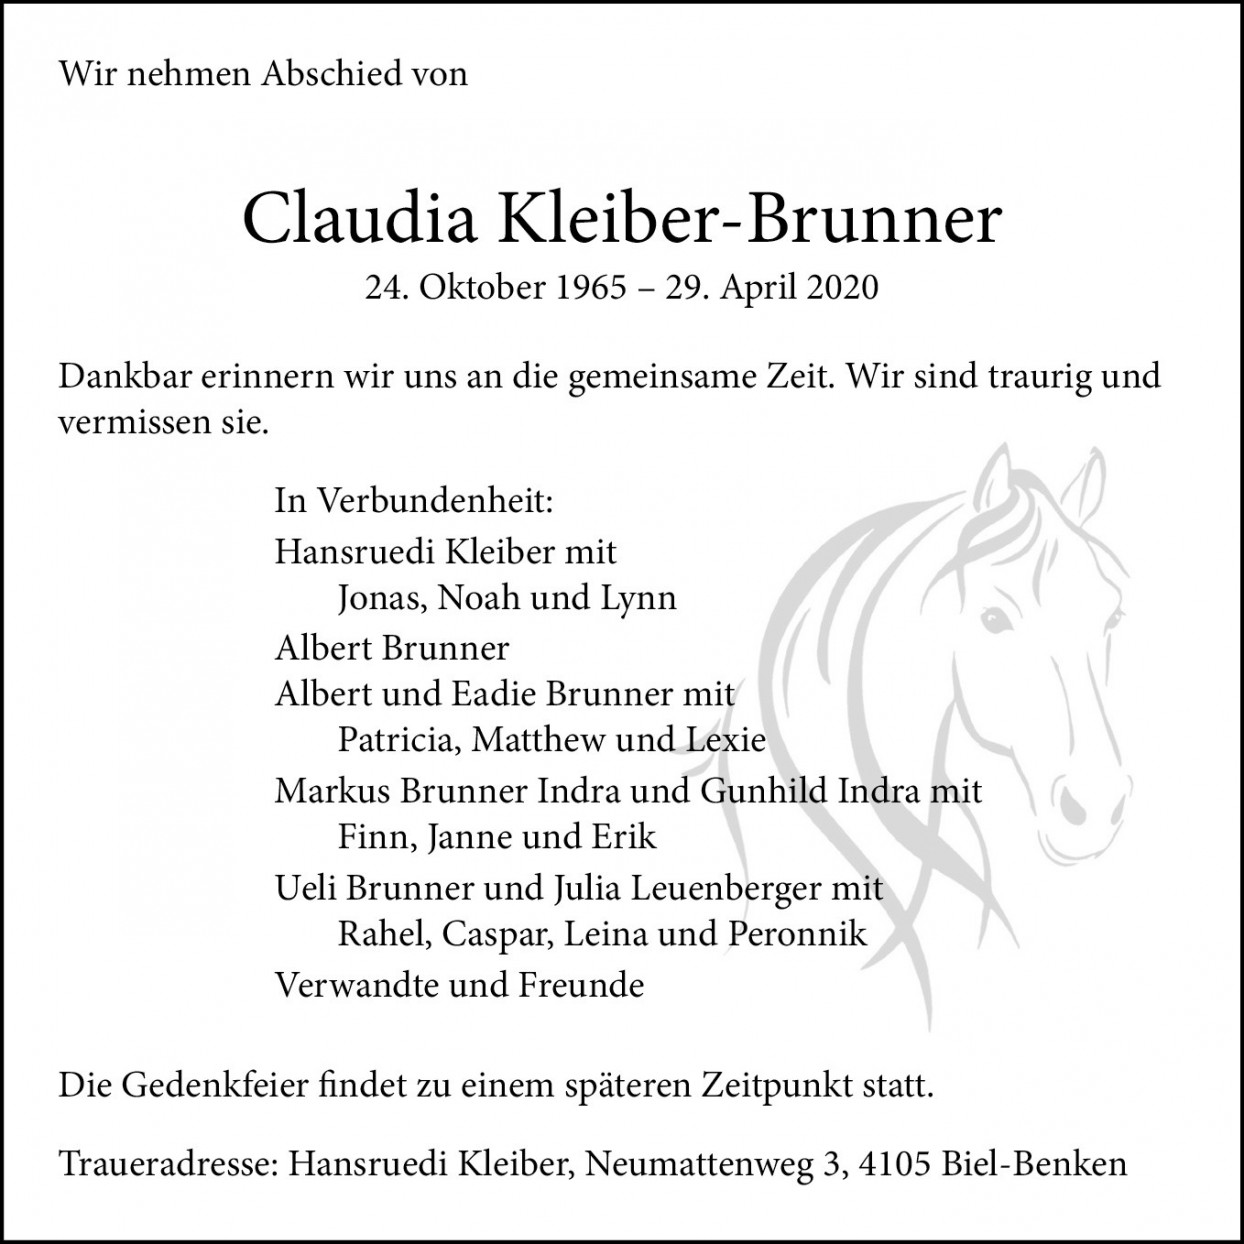 Claudia Kleiber-Brunner